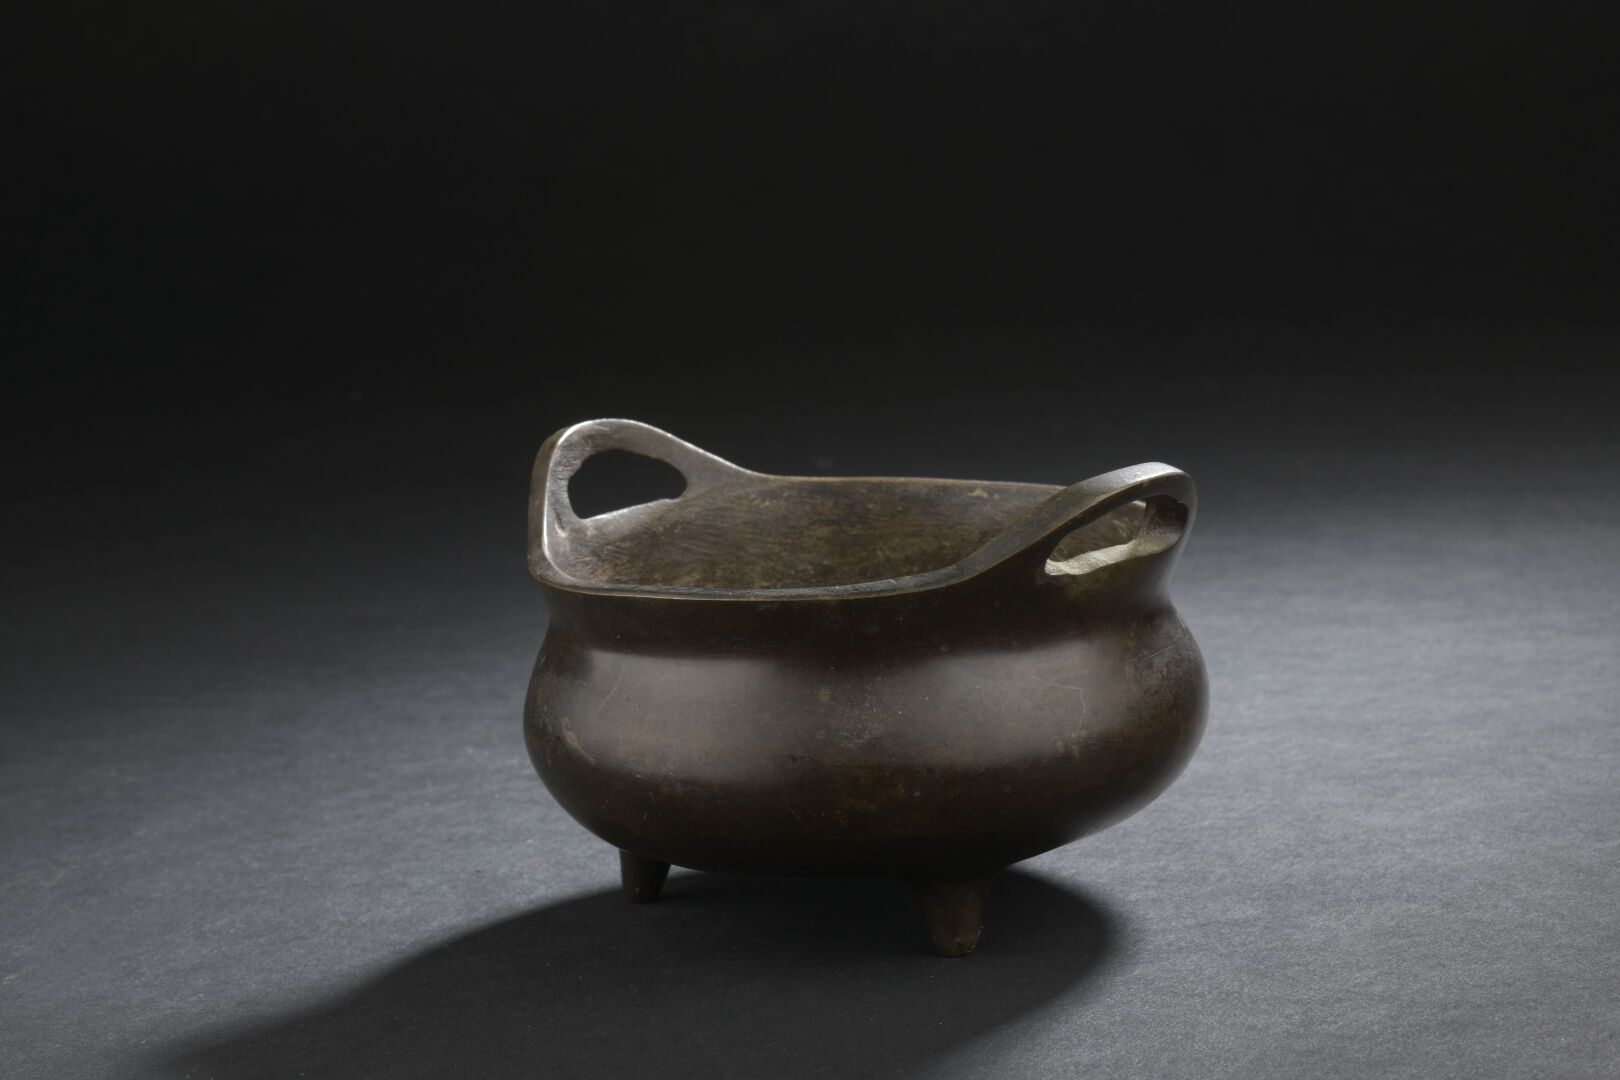 Null bruciaprofumi in bronzo
CINA, dinastia Qing (1644-1911)
Corpo rigonfio, pog&hellip;